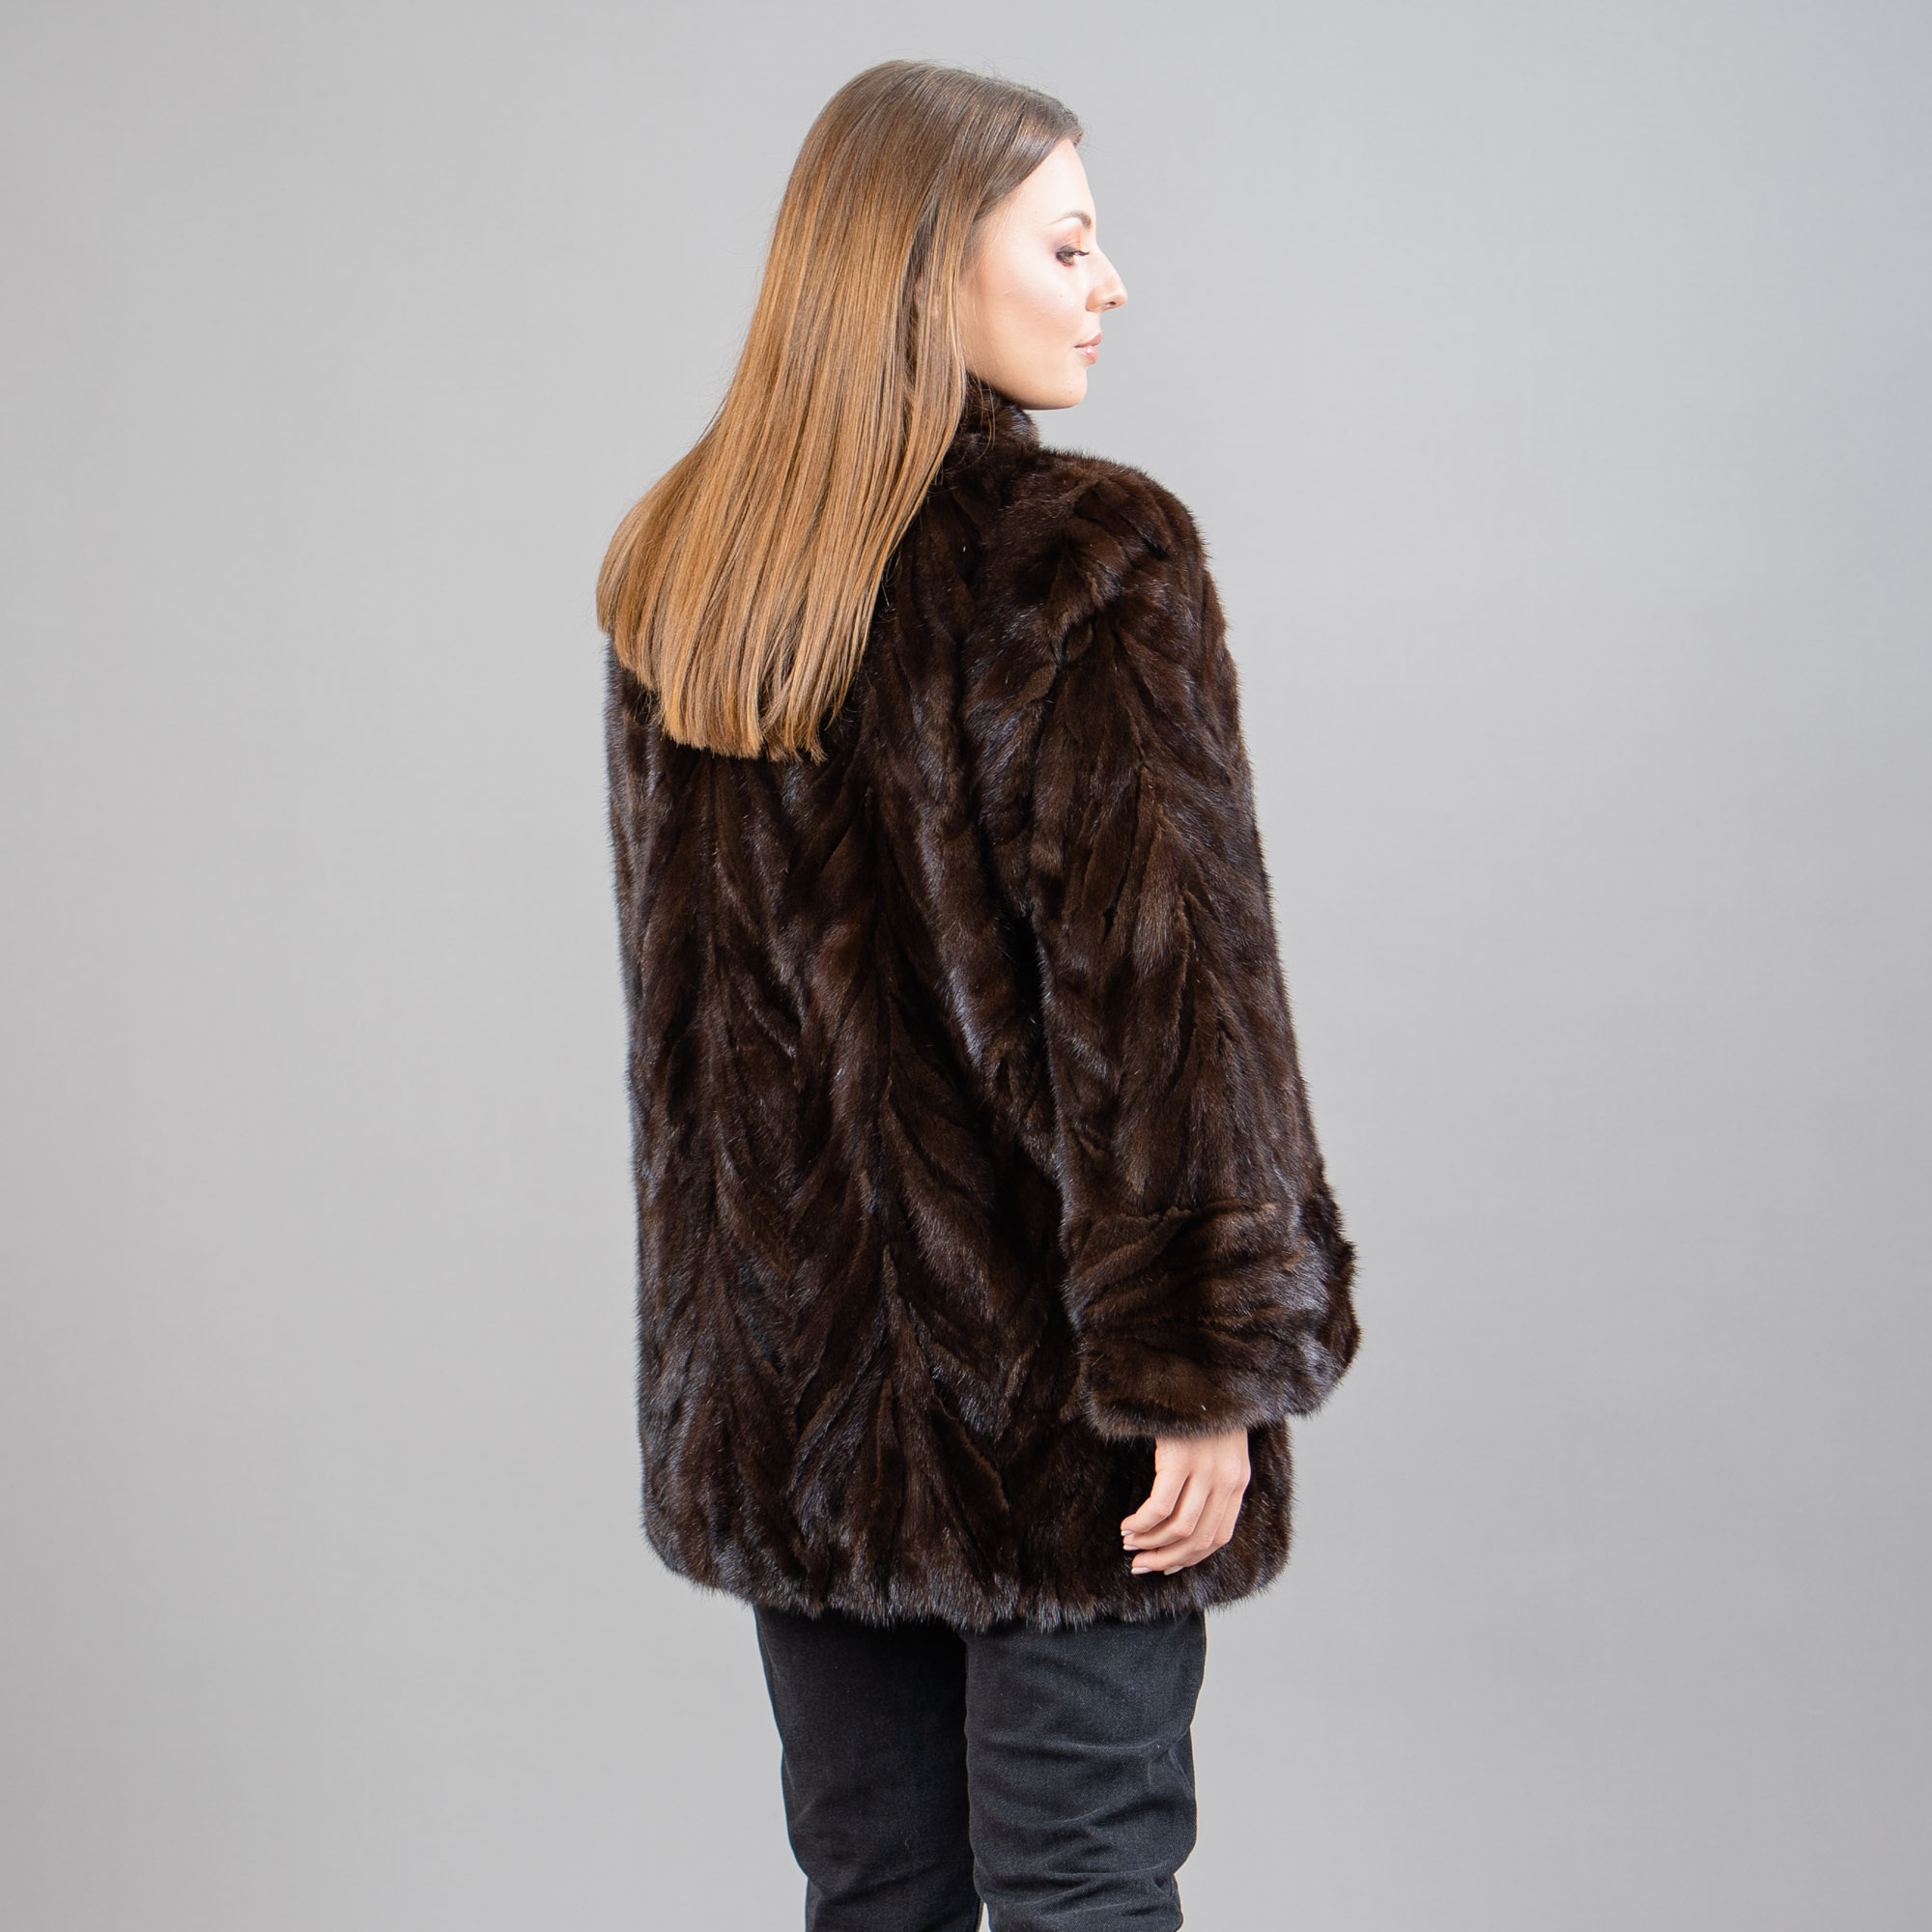 collared mink fur jacket in brown color